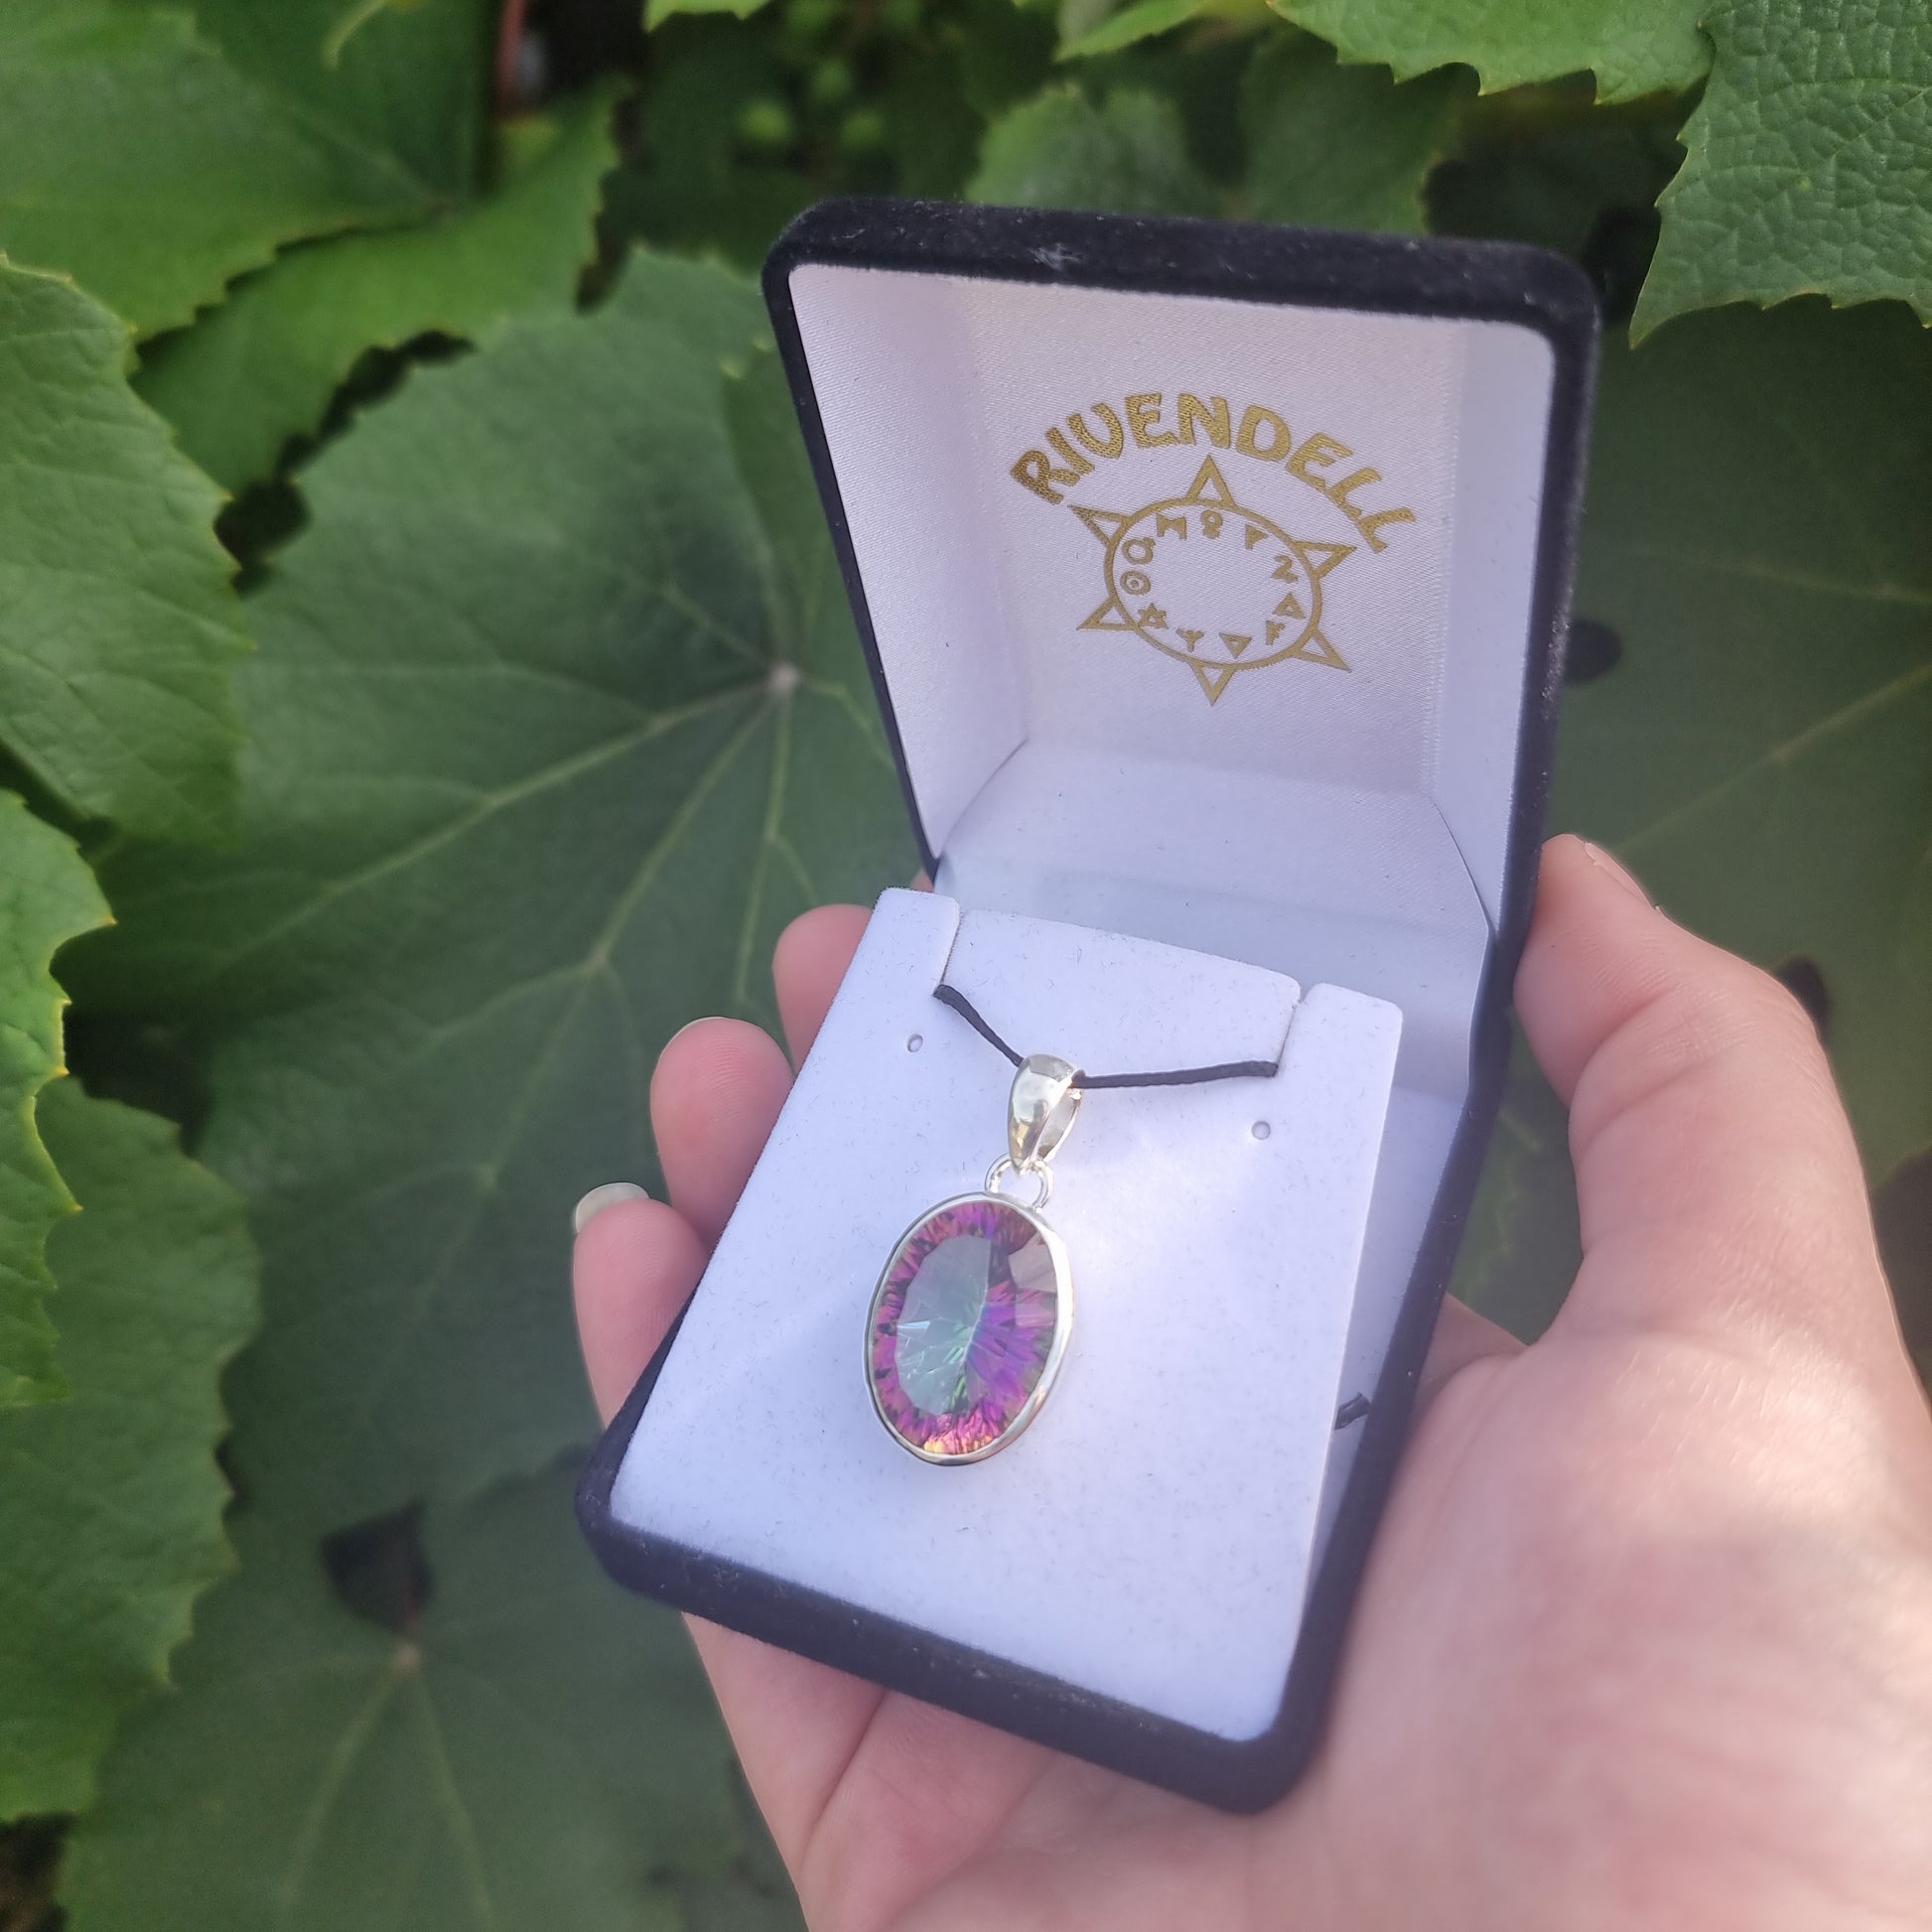 Mystic topaz pendants - Rivendell Shop